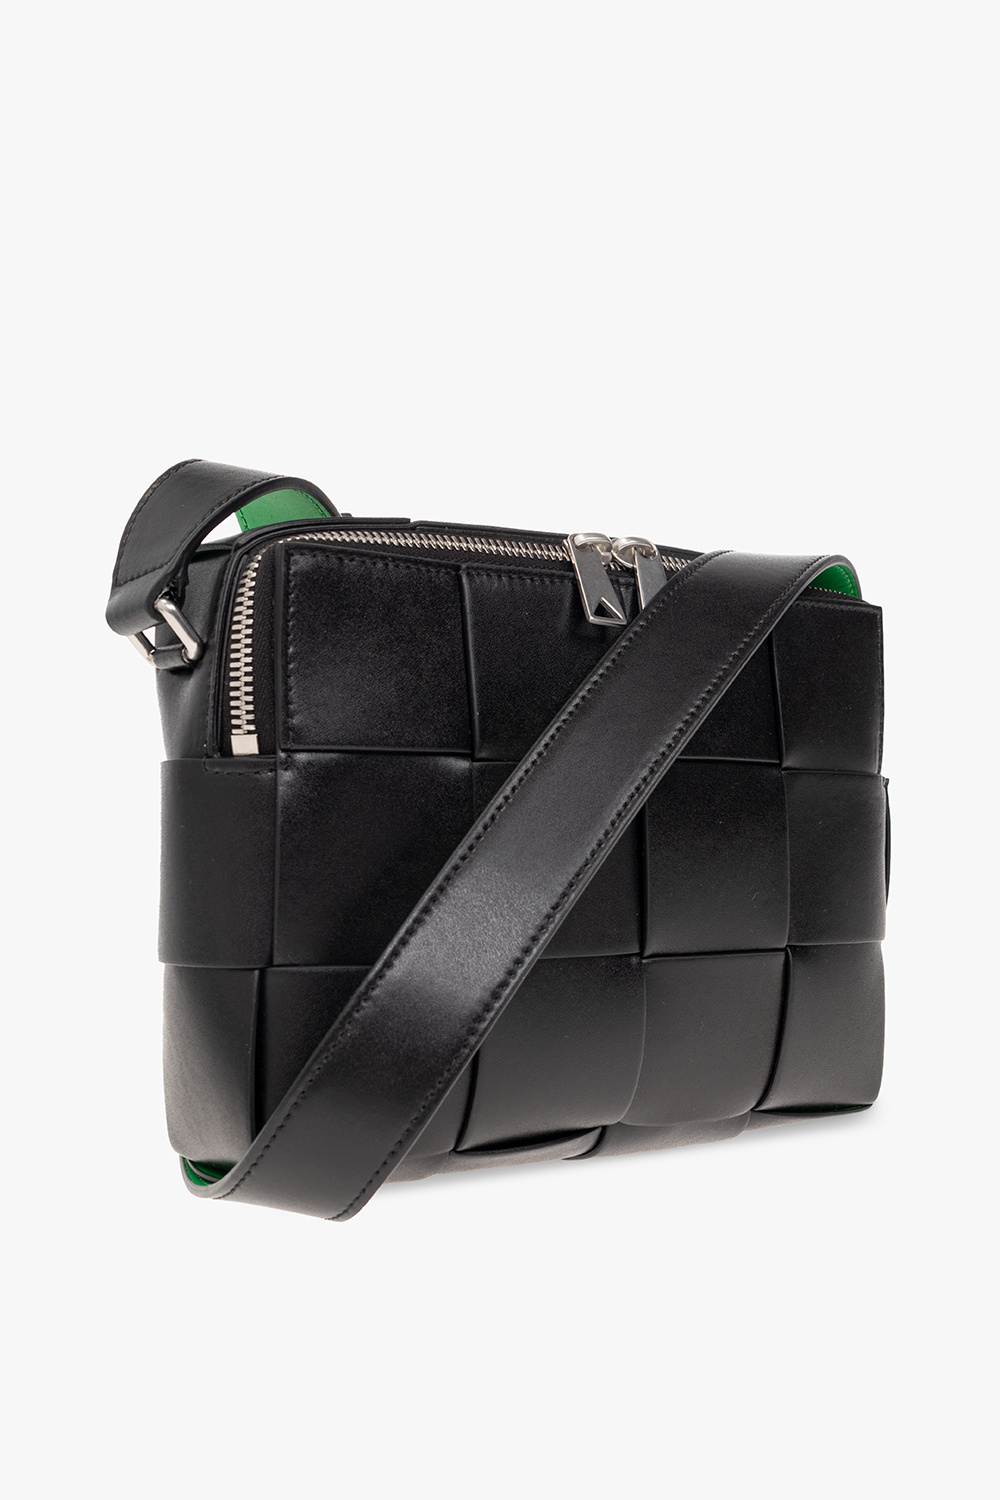 Bottega Veneta ‘Cassette Camera’ shoulder bag